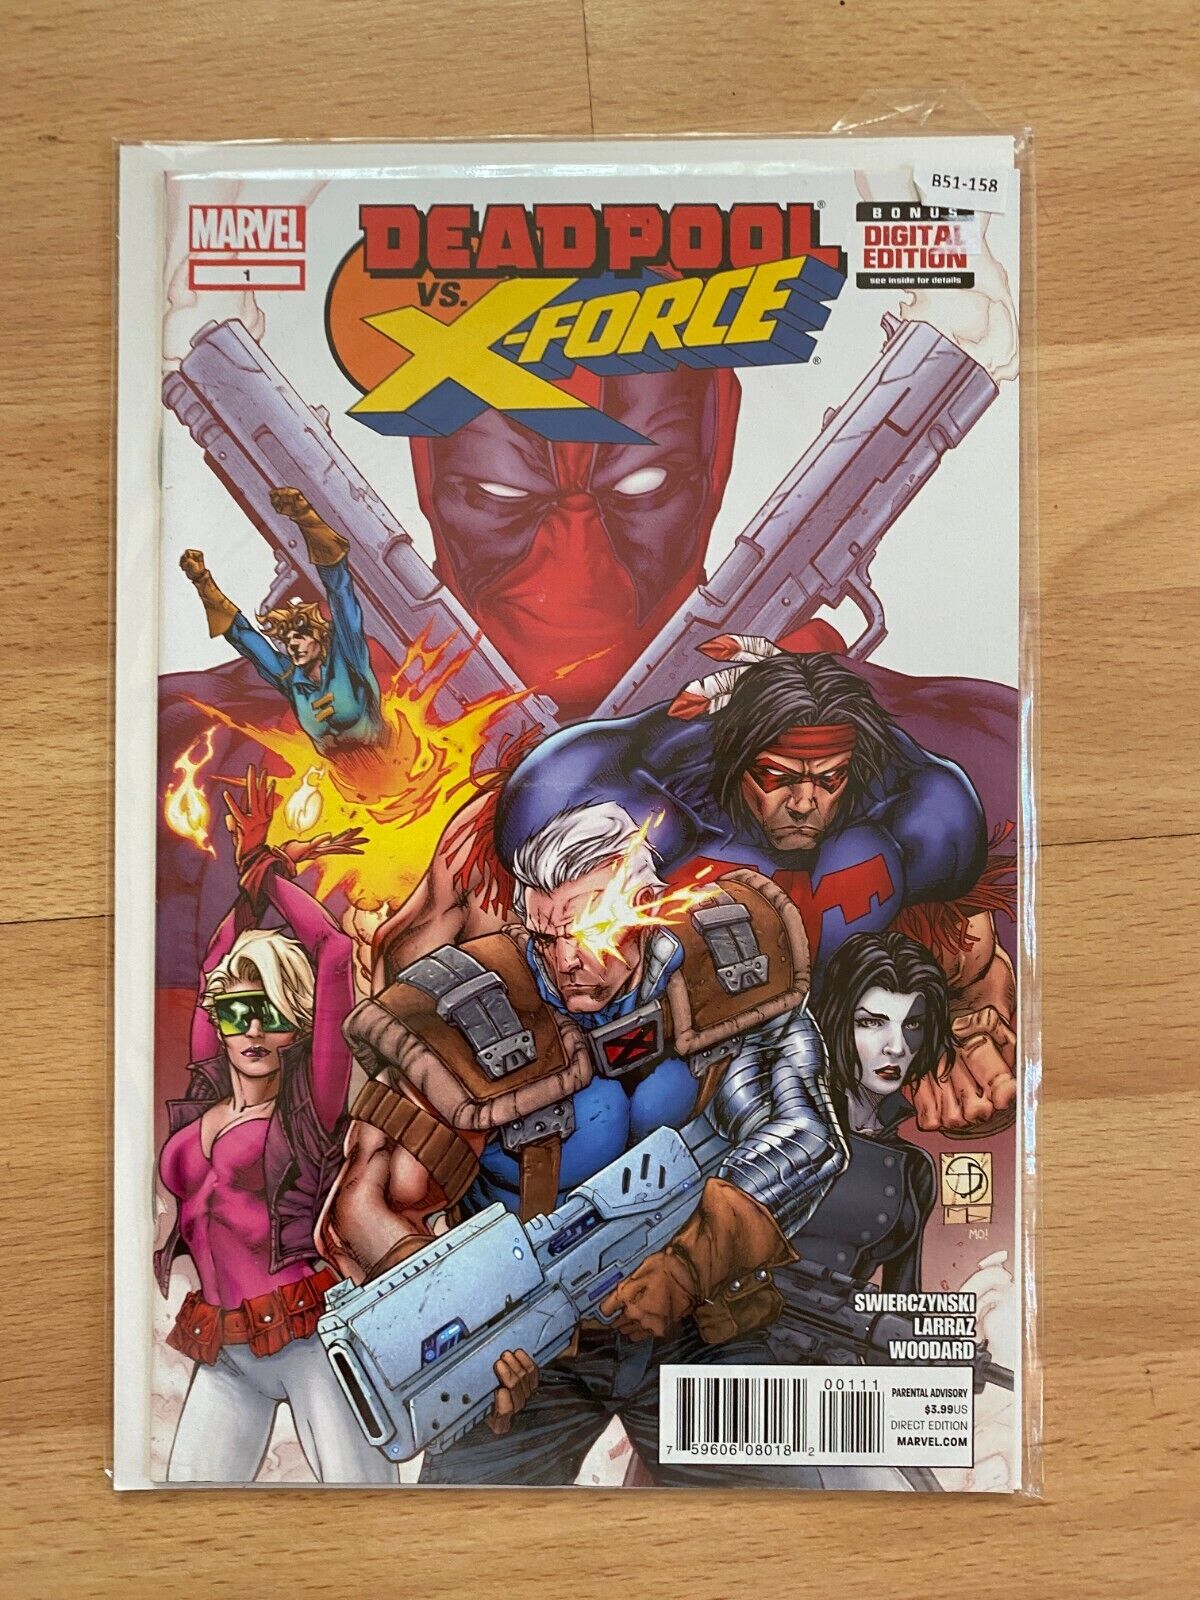 Deadpool Vs X-Force 1 - High Grade Comic Book- B51-158